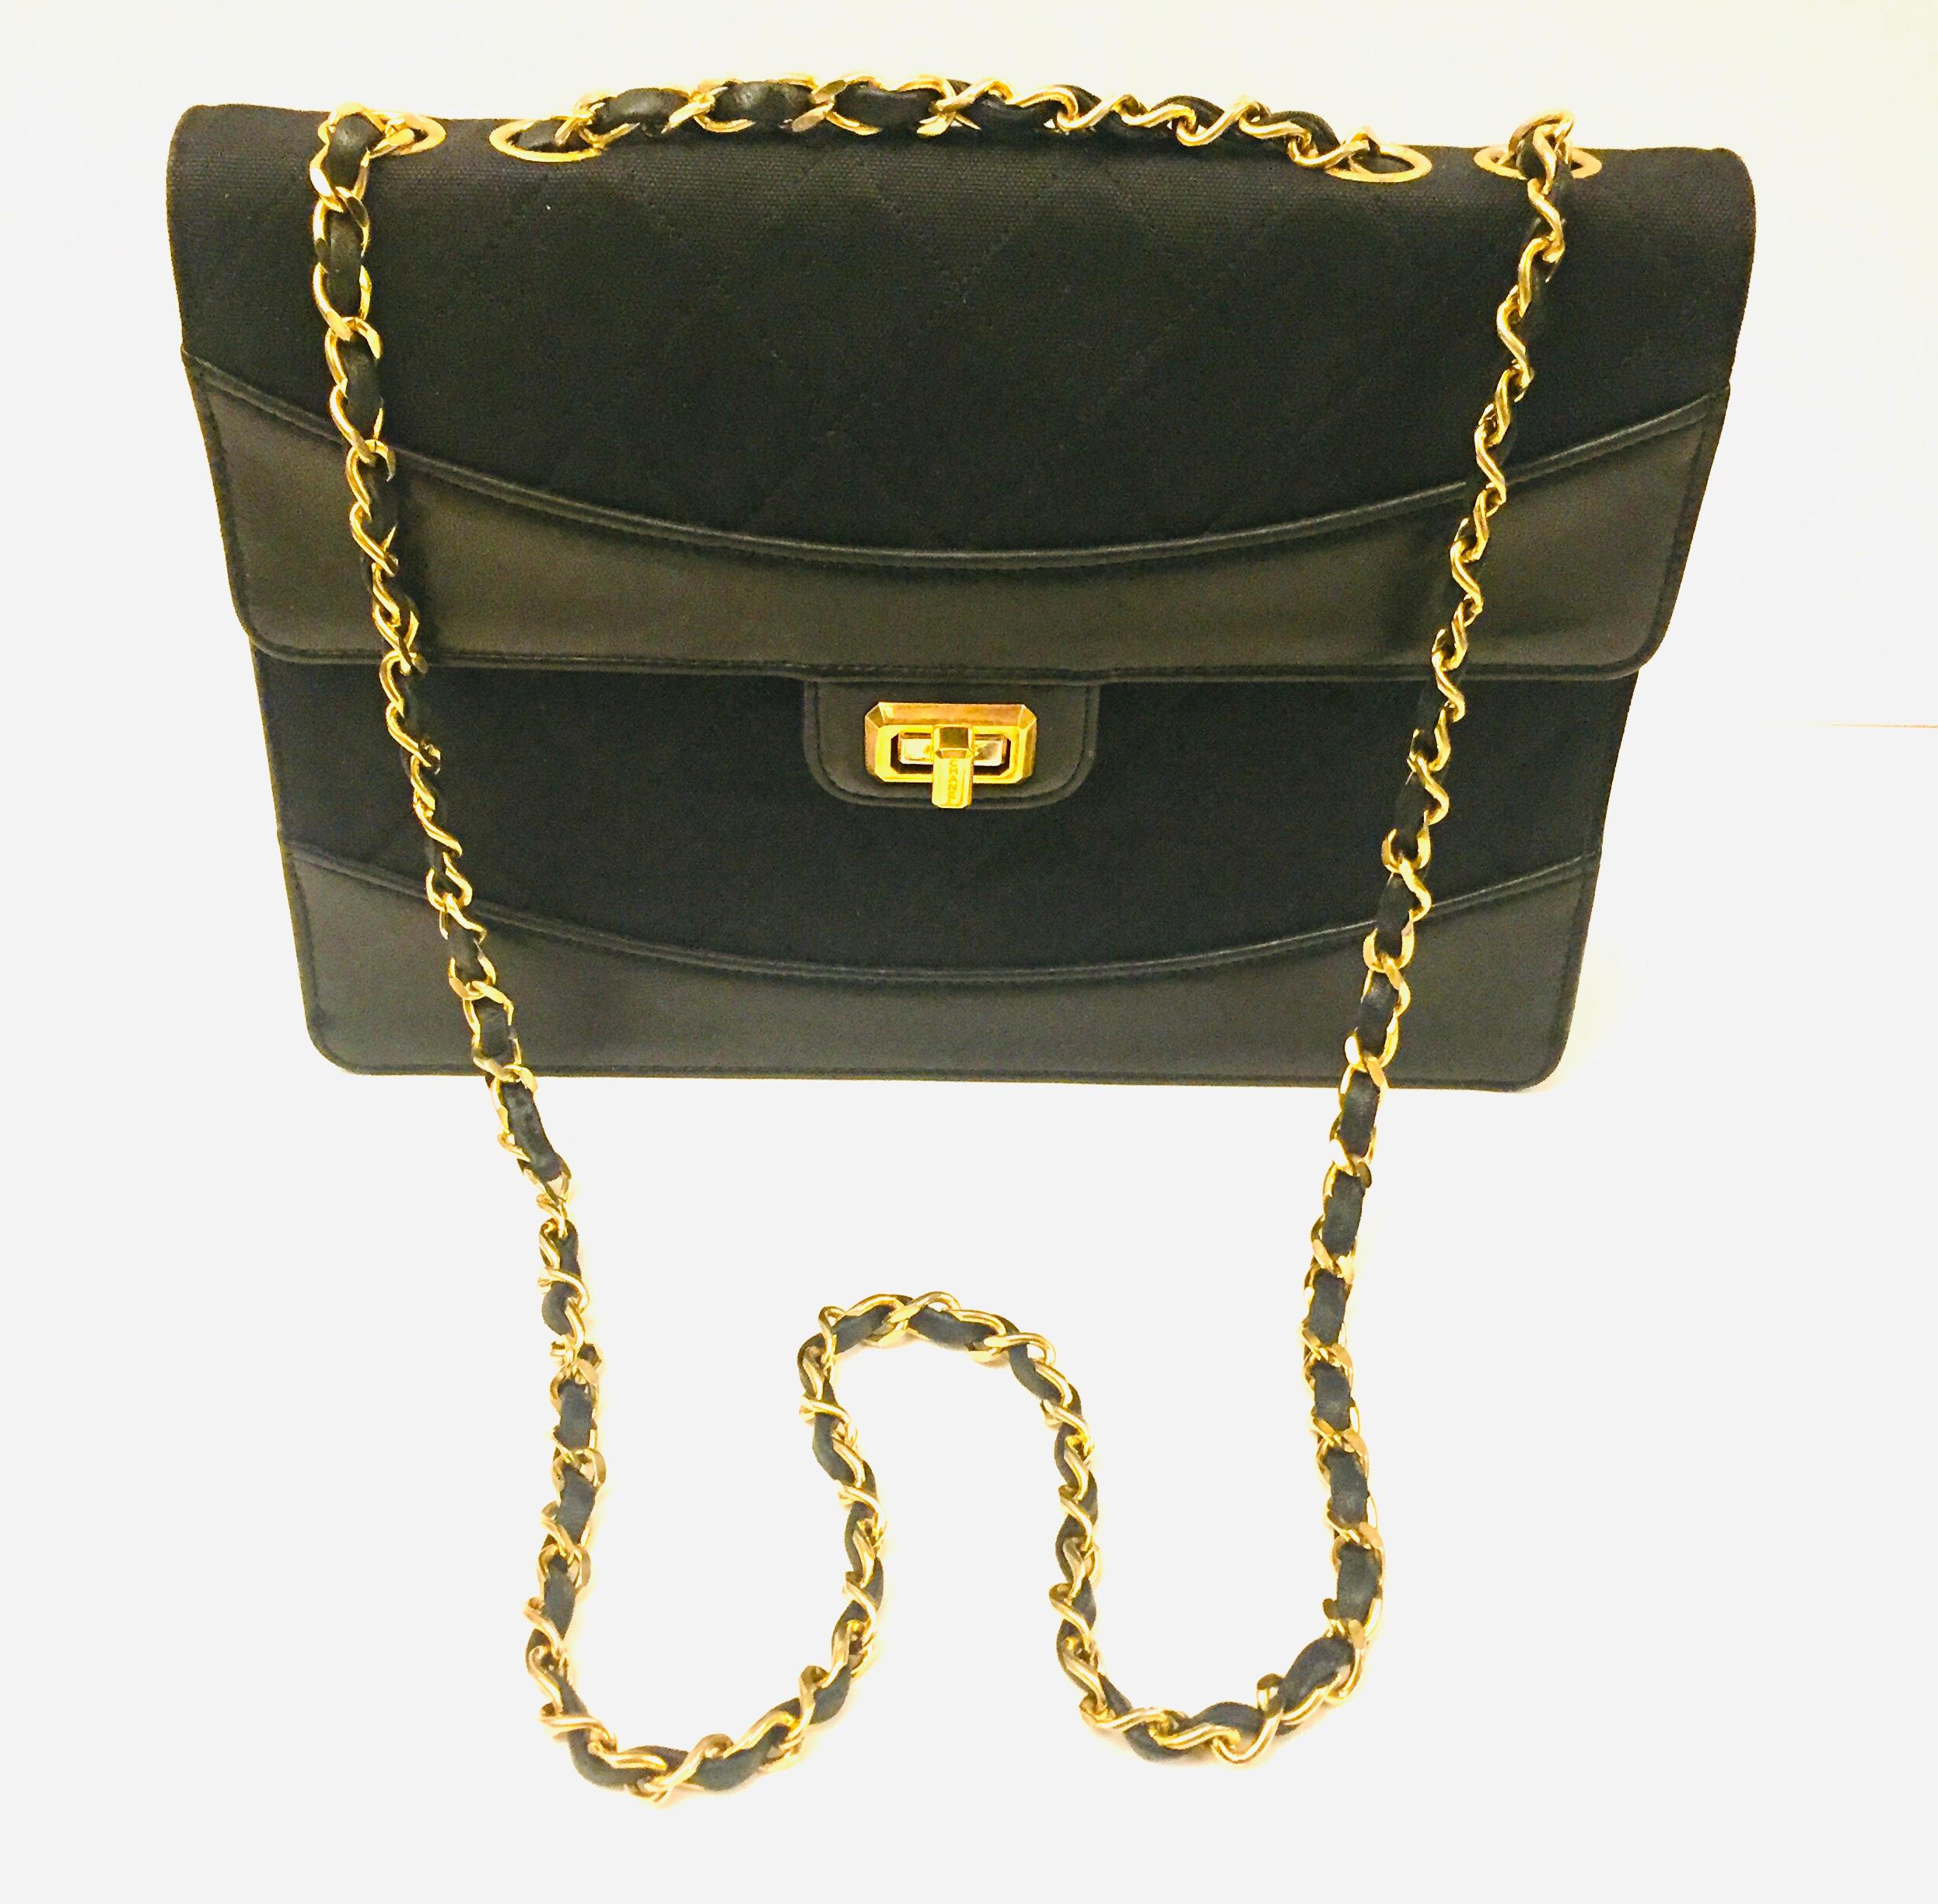 Women's Chanel black canvas/leather shoulder bag 